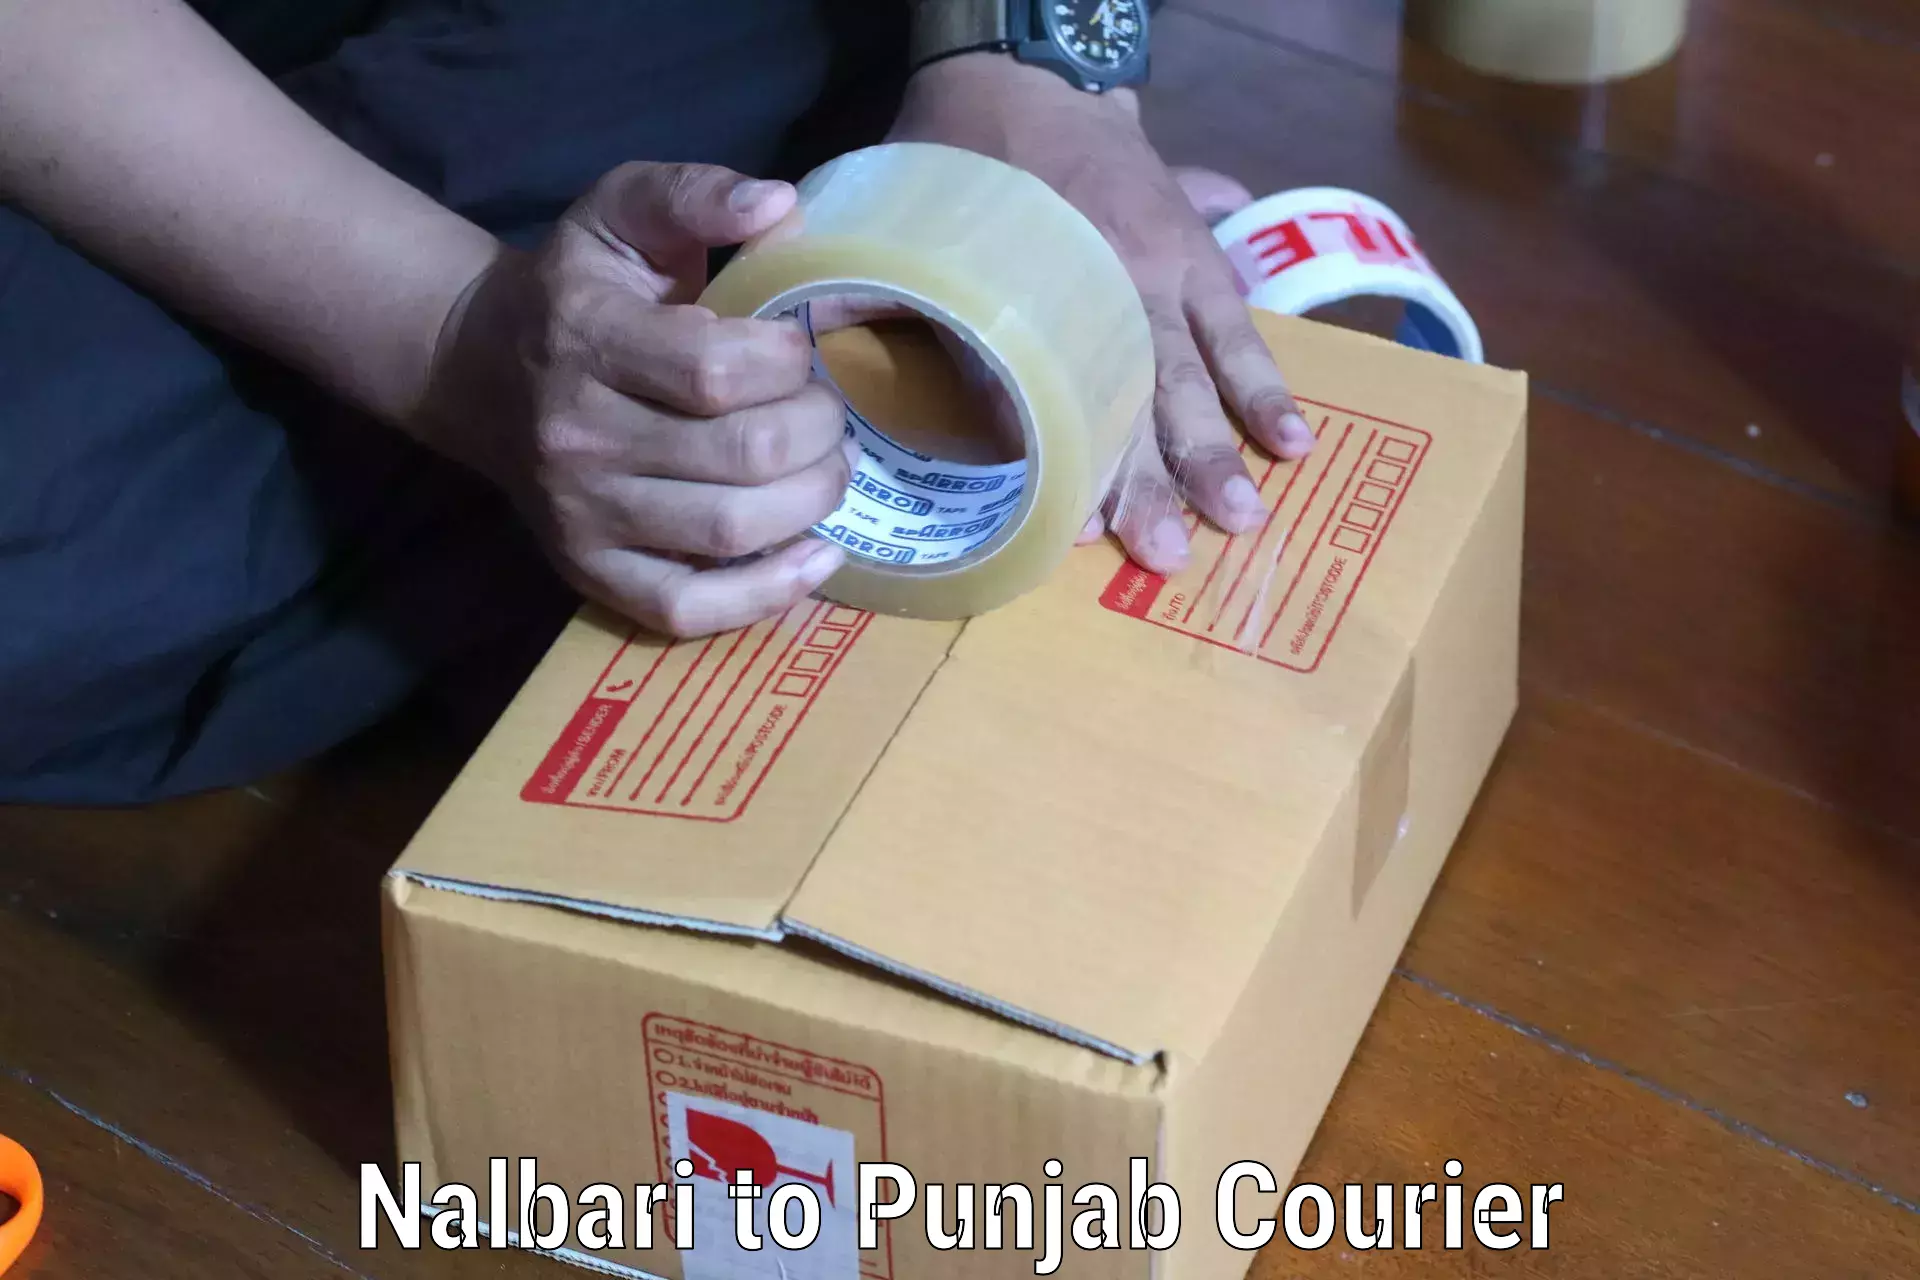 Professional parcel services Nalbari to Jagraon